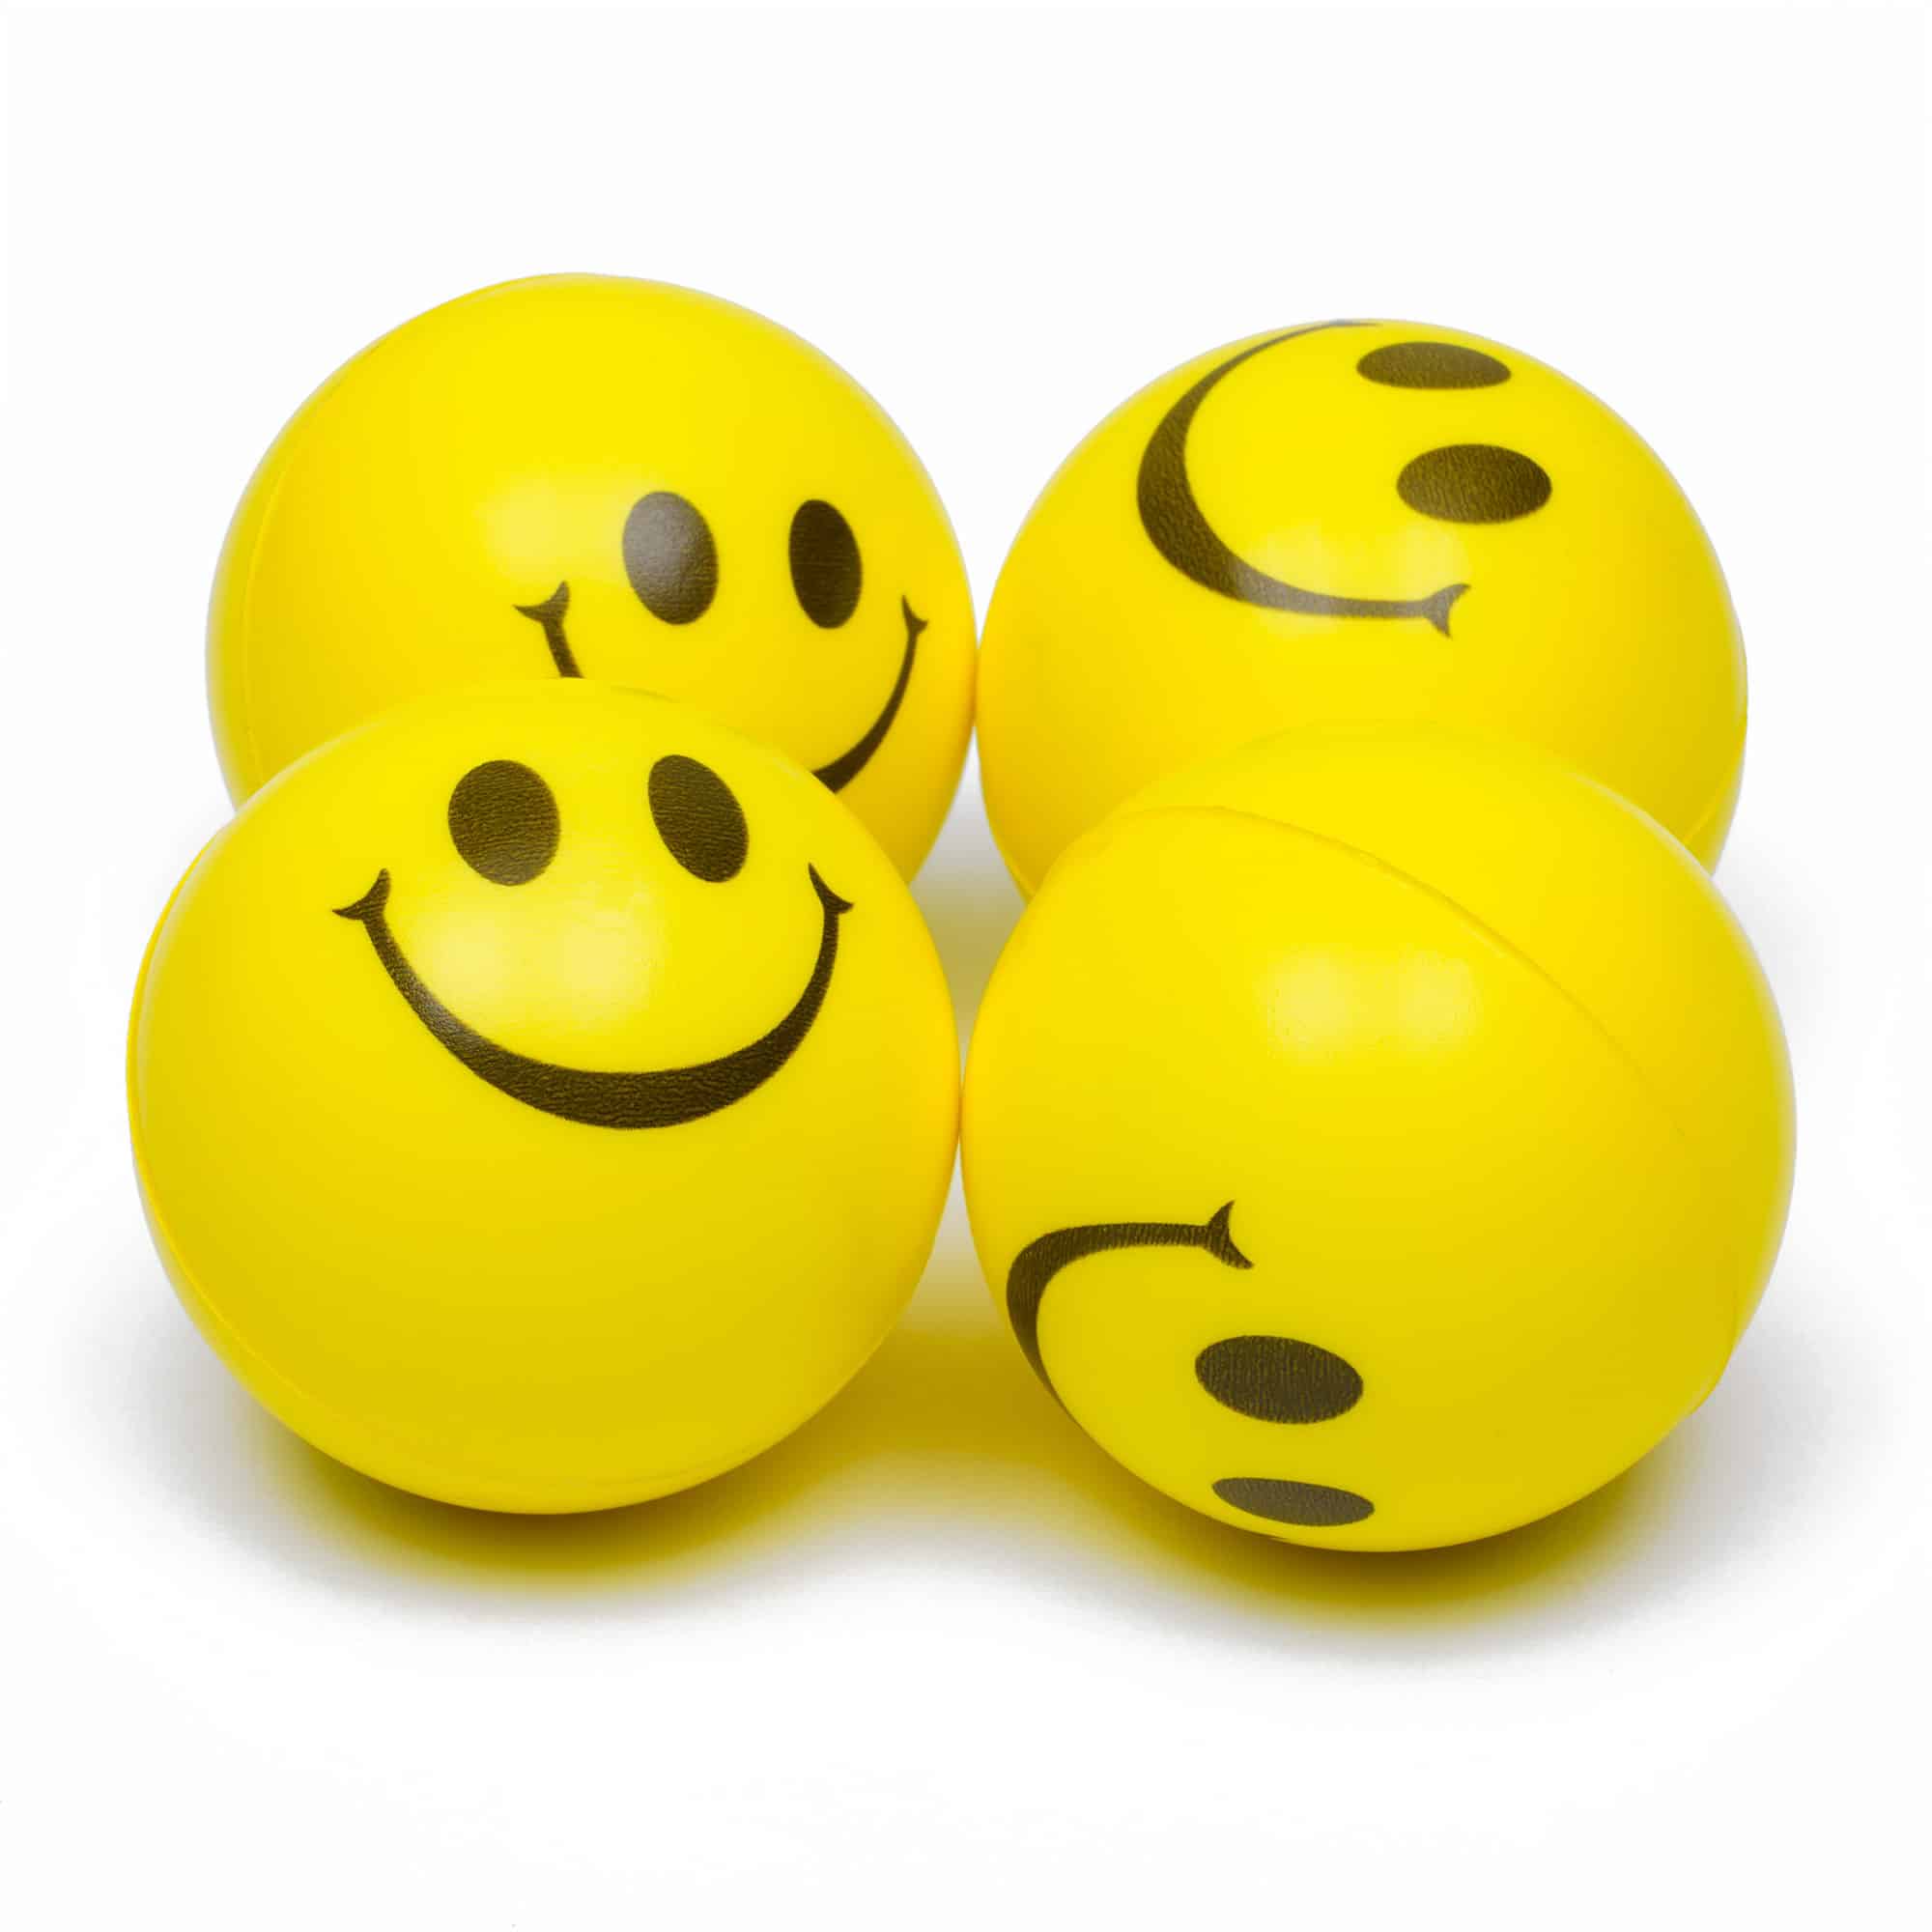 Smiley Print Stress Ball - 60mm